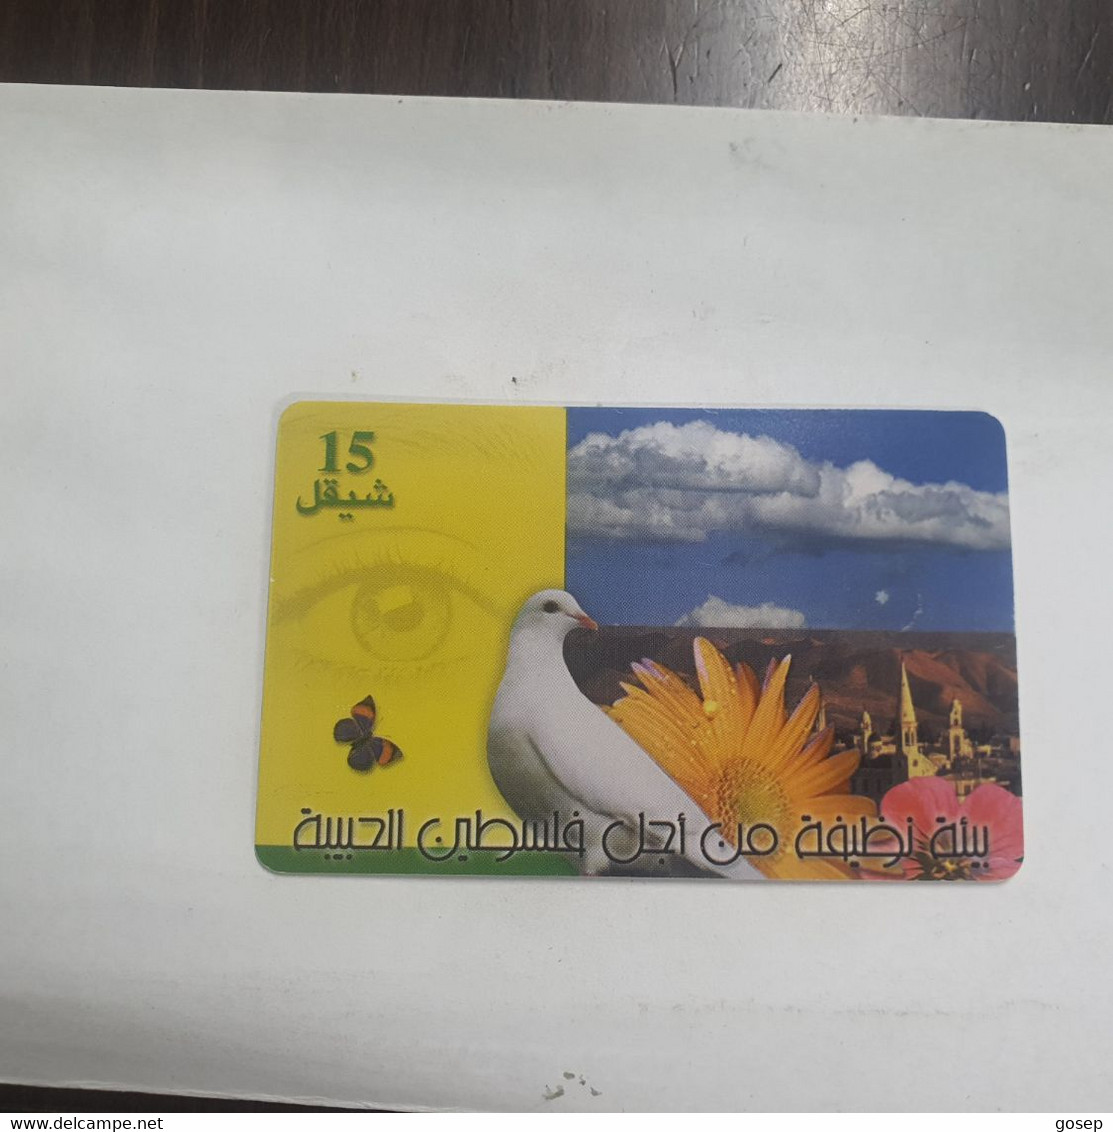 Plastine-(PS-PAL-0012D)-Keep Palestine Clean-Dove-(546)-(8/2000)(15₪)(0033-022955)-used Card+1card Prepiad Free - Palestina